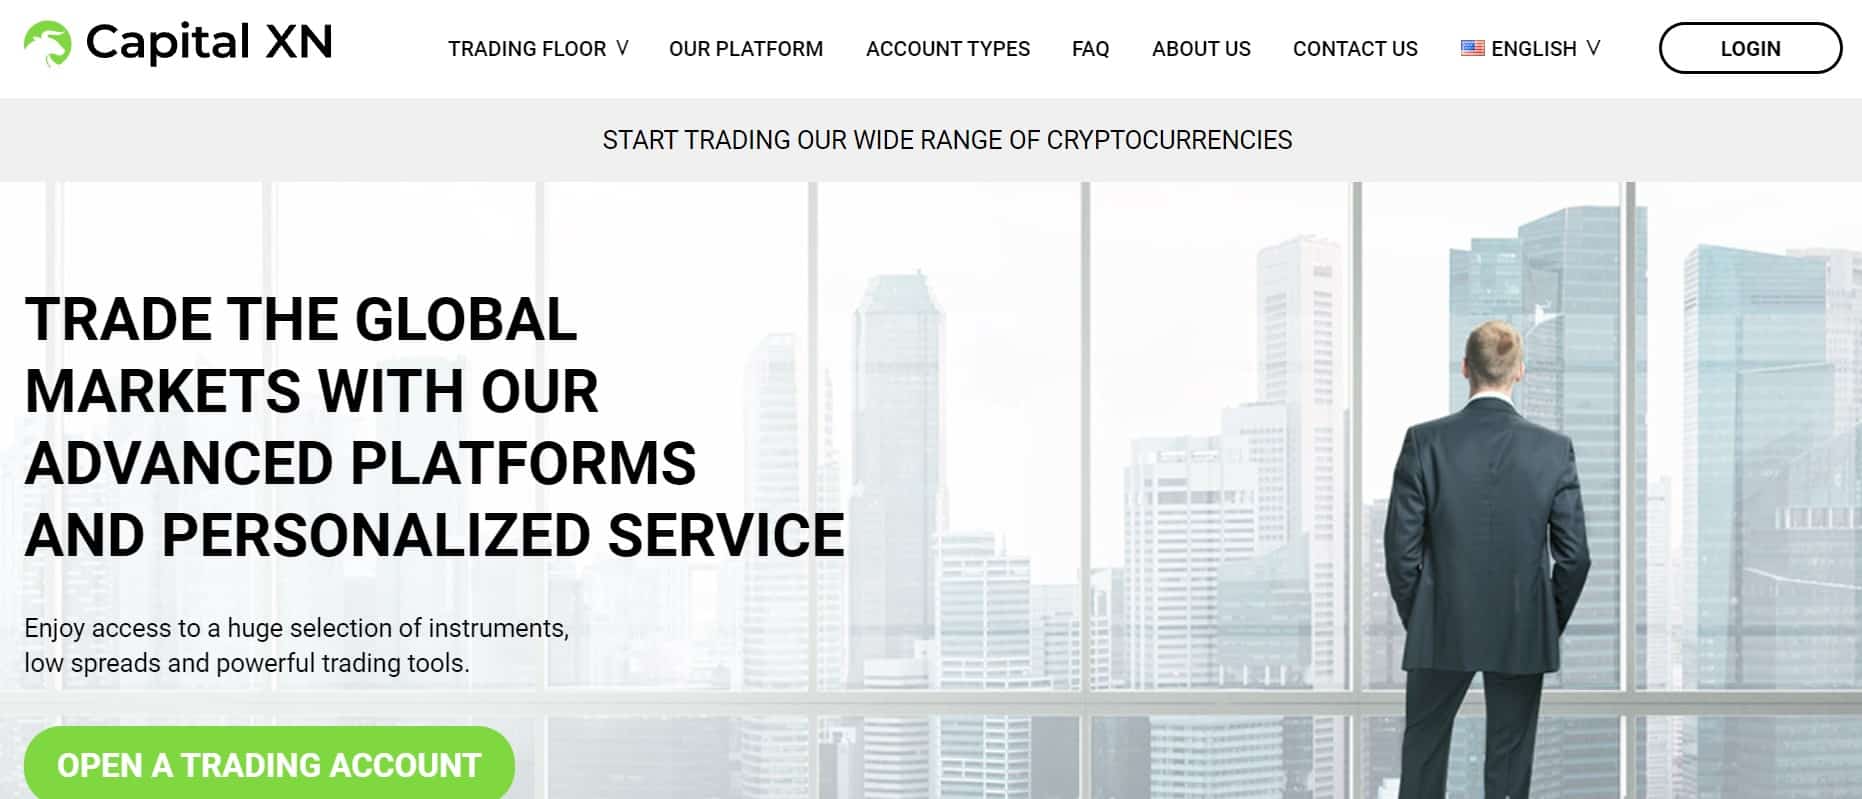 CapitalXN website